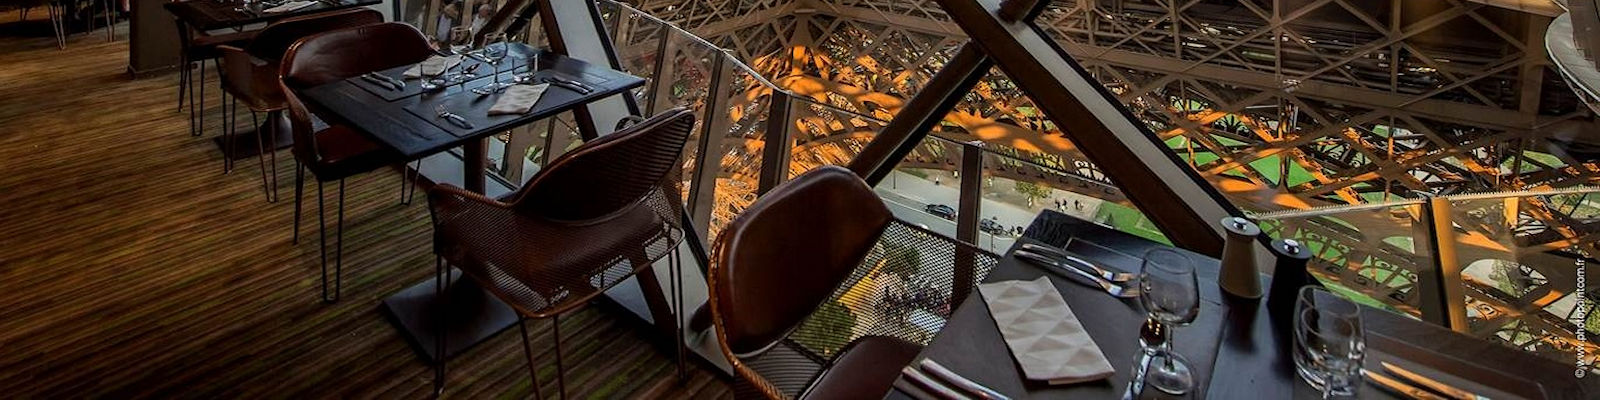 58 Tour Eiffel Restaurant on the Eiffel Tower